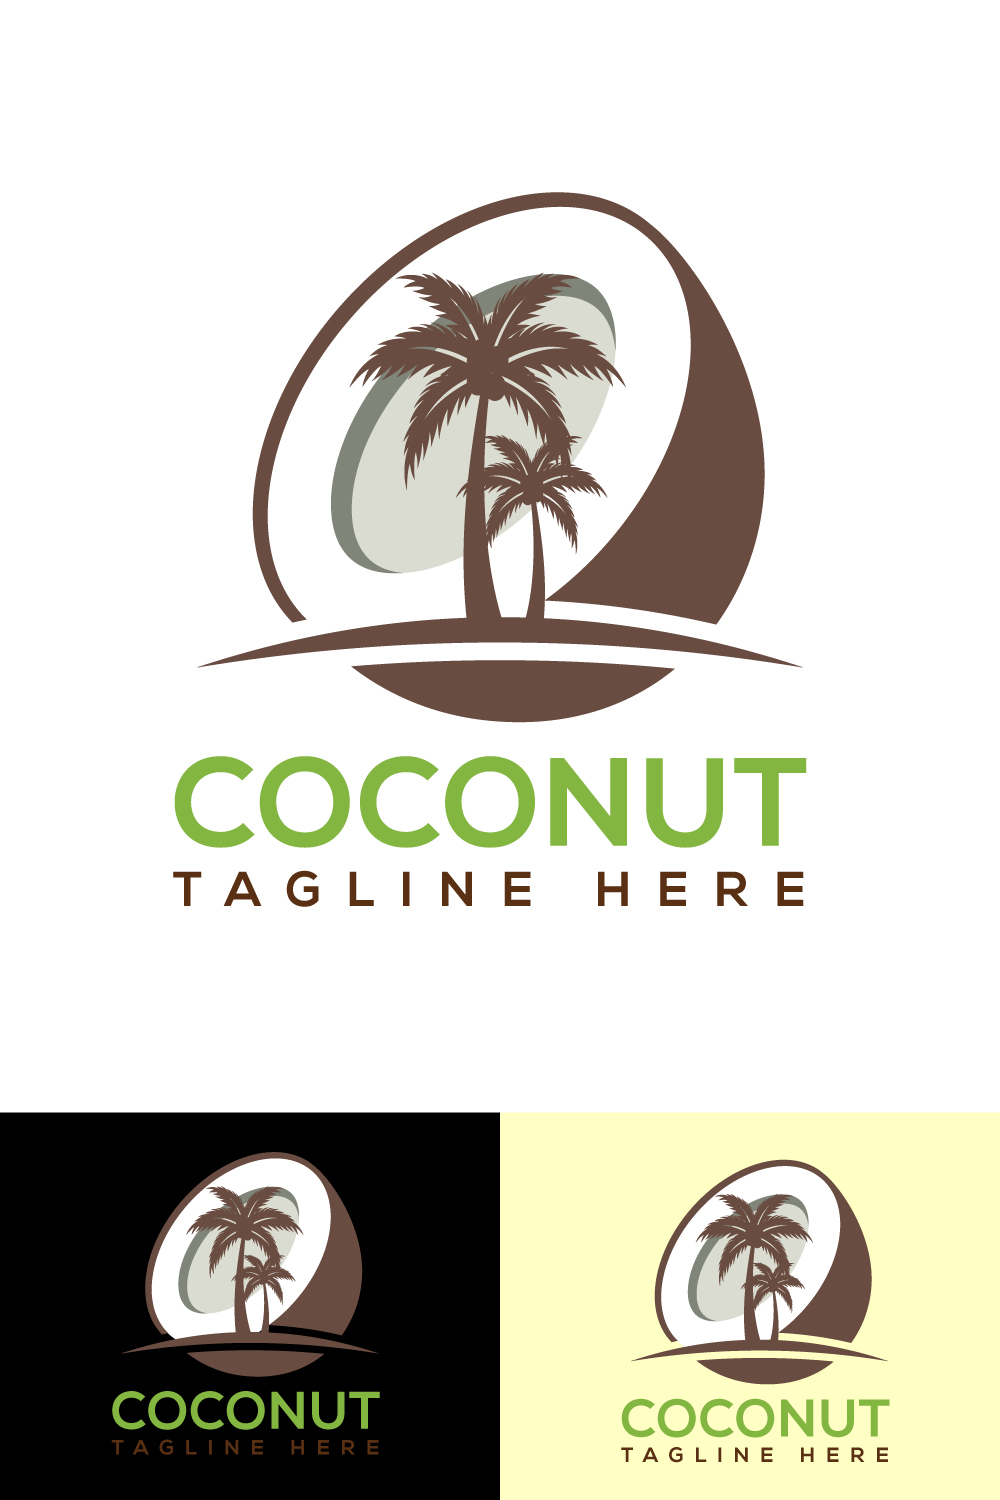 Nature Coconut Logo Design pinterest image.